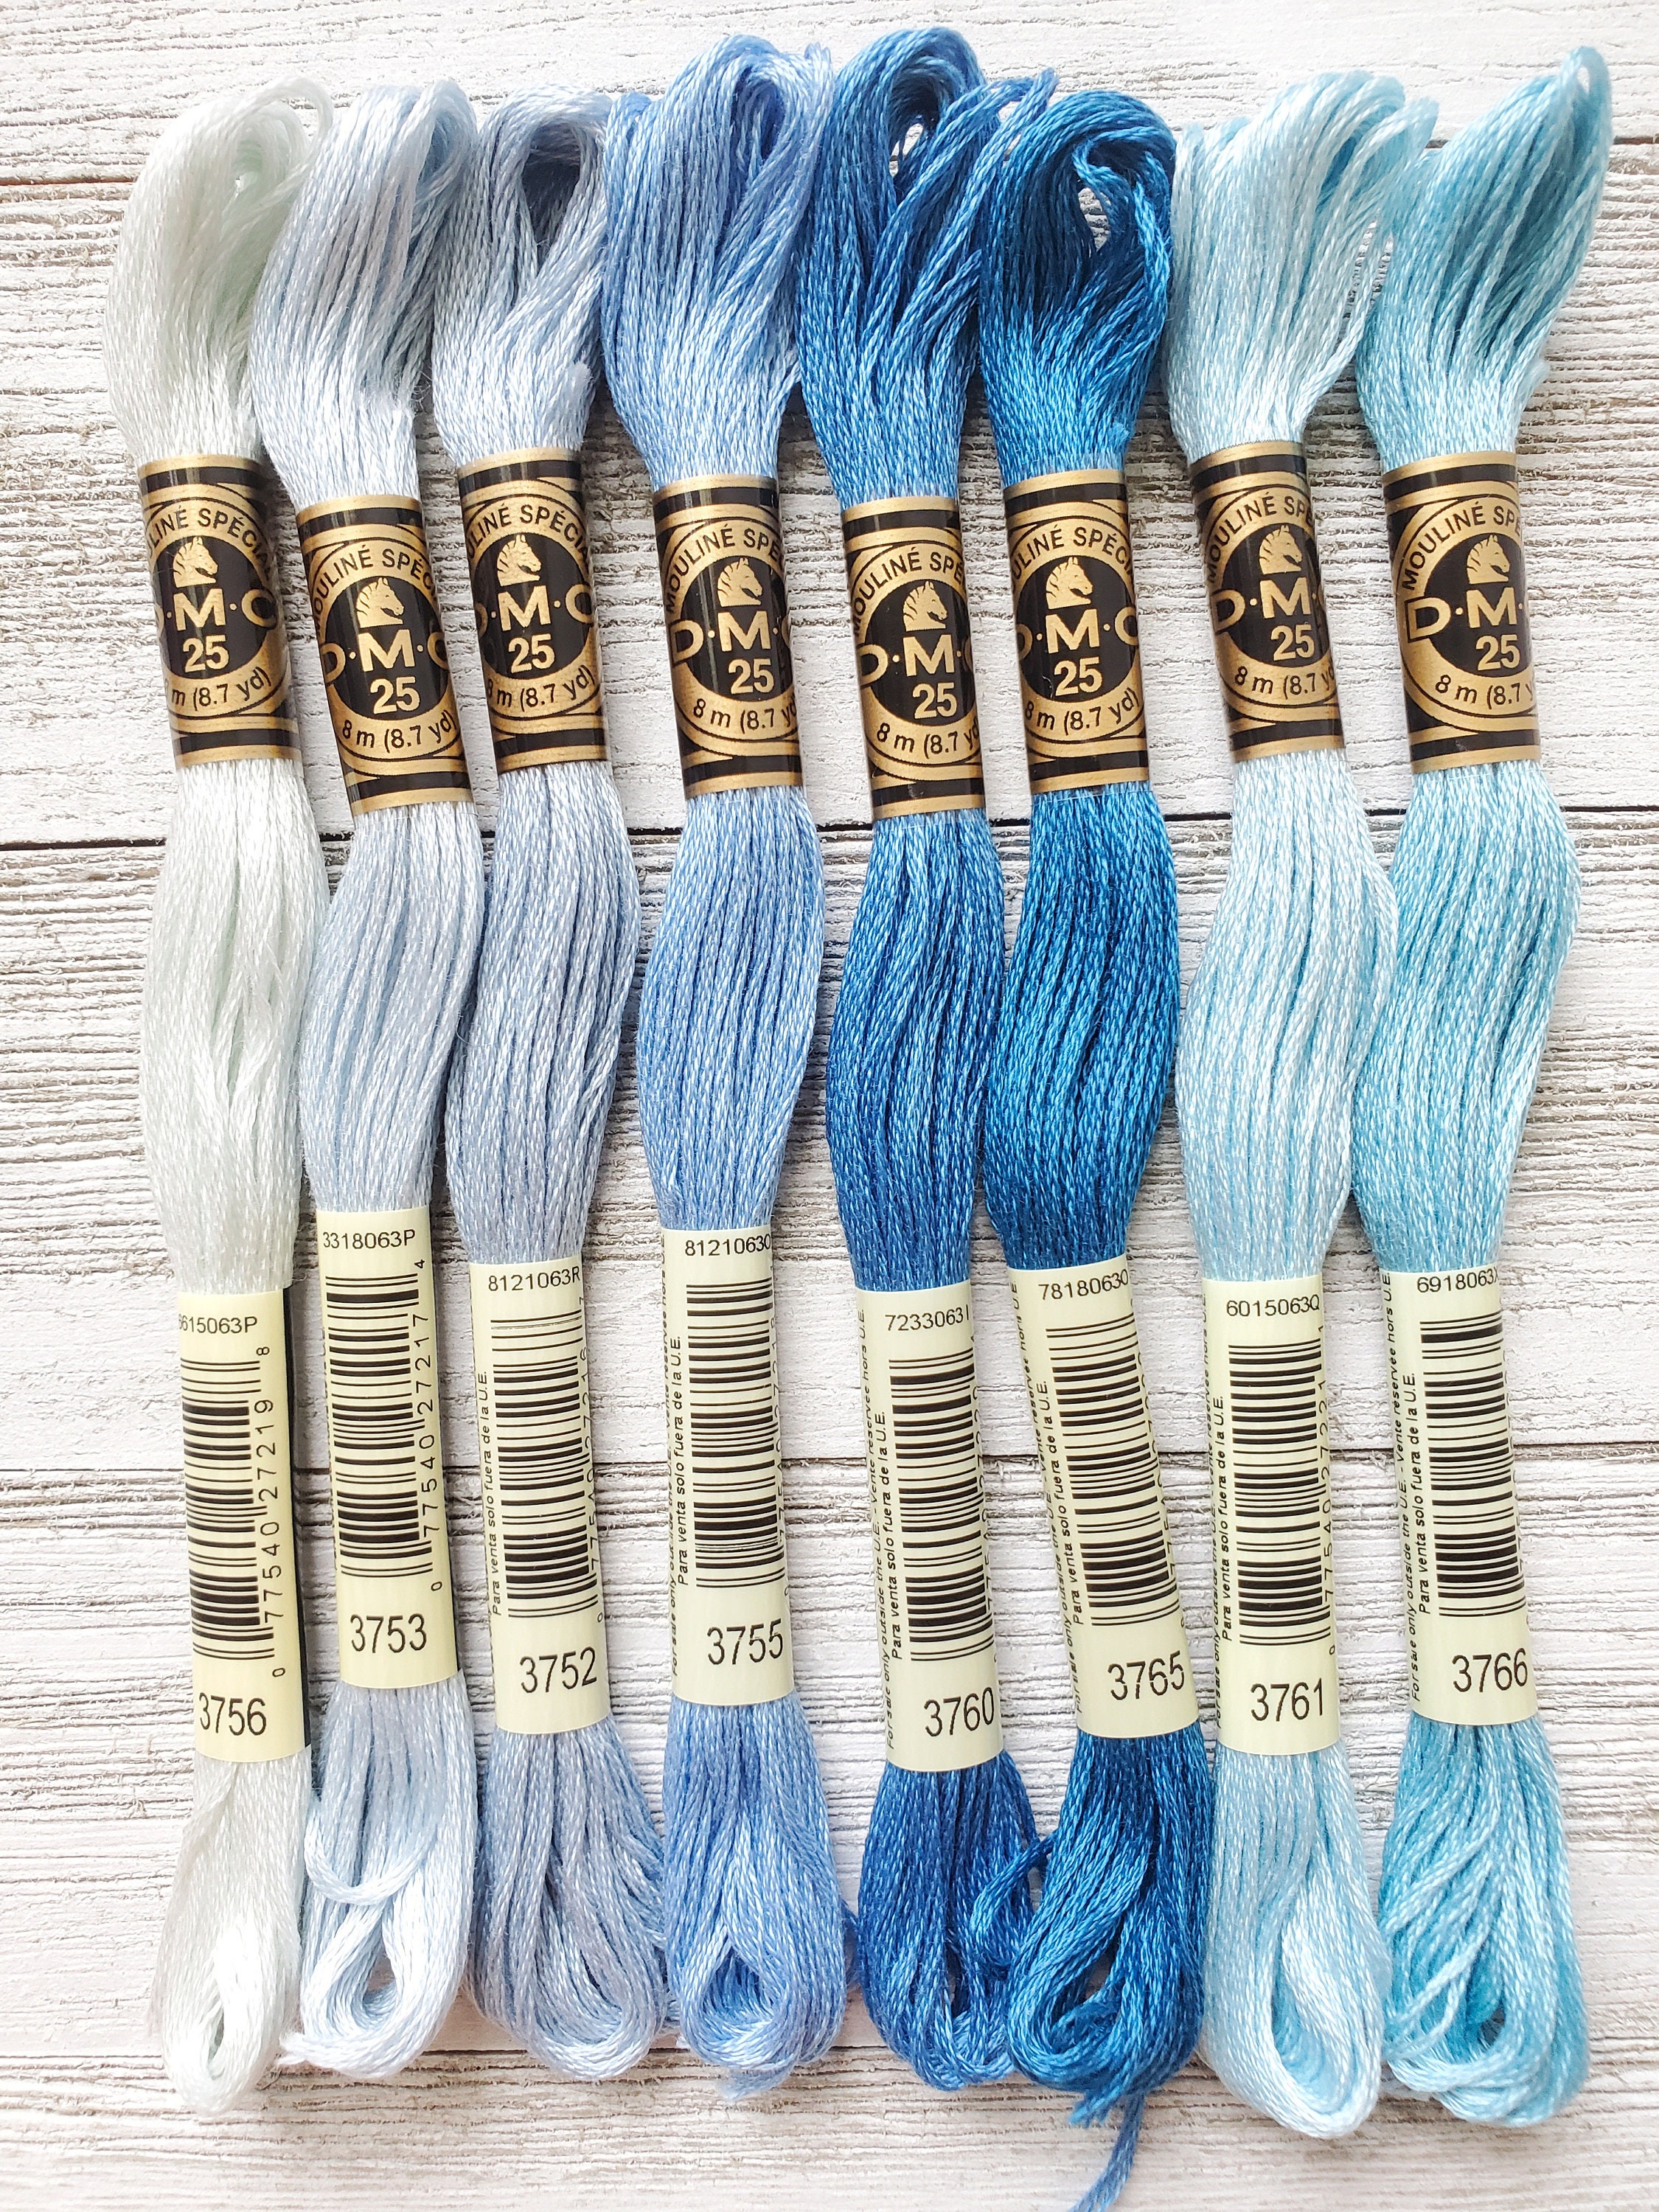 8x Blue DMC Flosses, Dmc Threads, DMC Kit, Dmc Set of Colors, Dmc Cotton  Floss, Dmc Embroidery Floss, Cross Stitch Floss, Blue Thread 